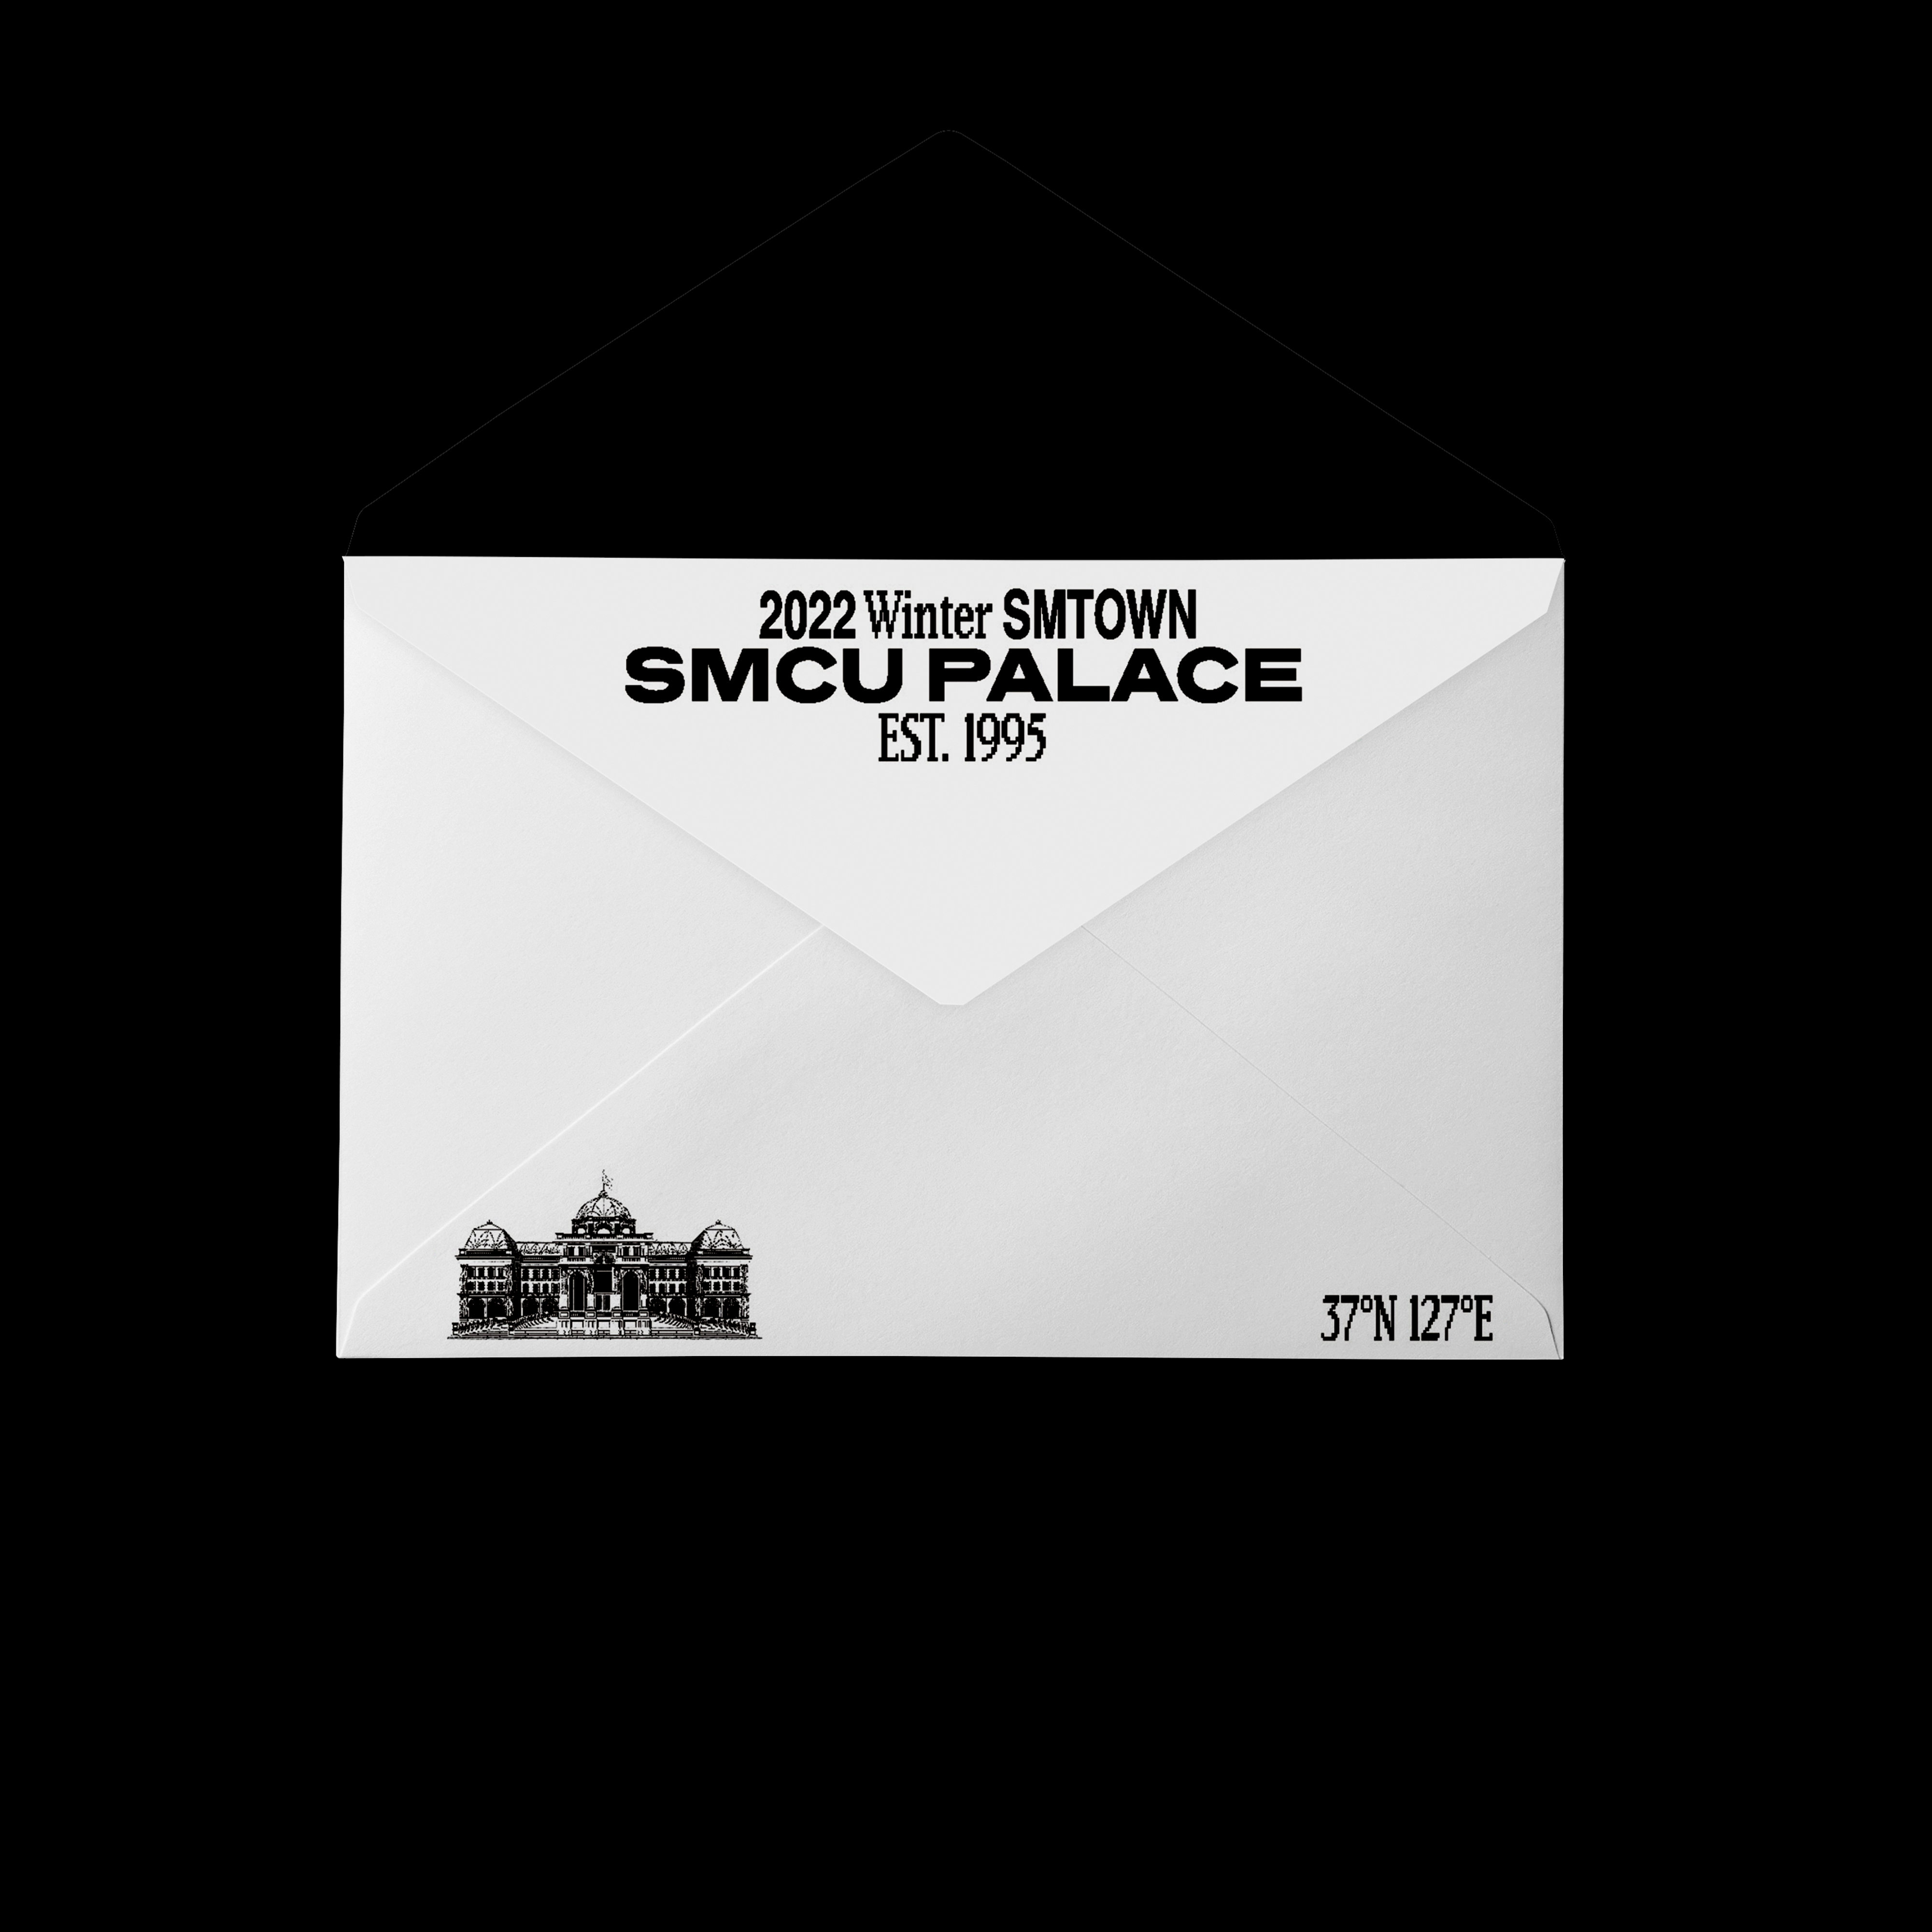 [全款 裸专] Super Junior - 2022 Winter SMTOWN : SMCU PALACE (GUEST. SUPER JUNIOR) (Membership Card Ver.) _kpop散粉收容所